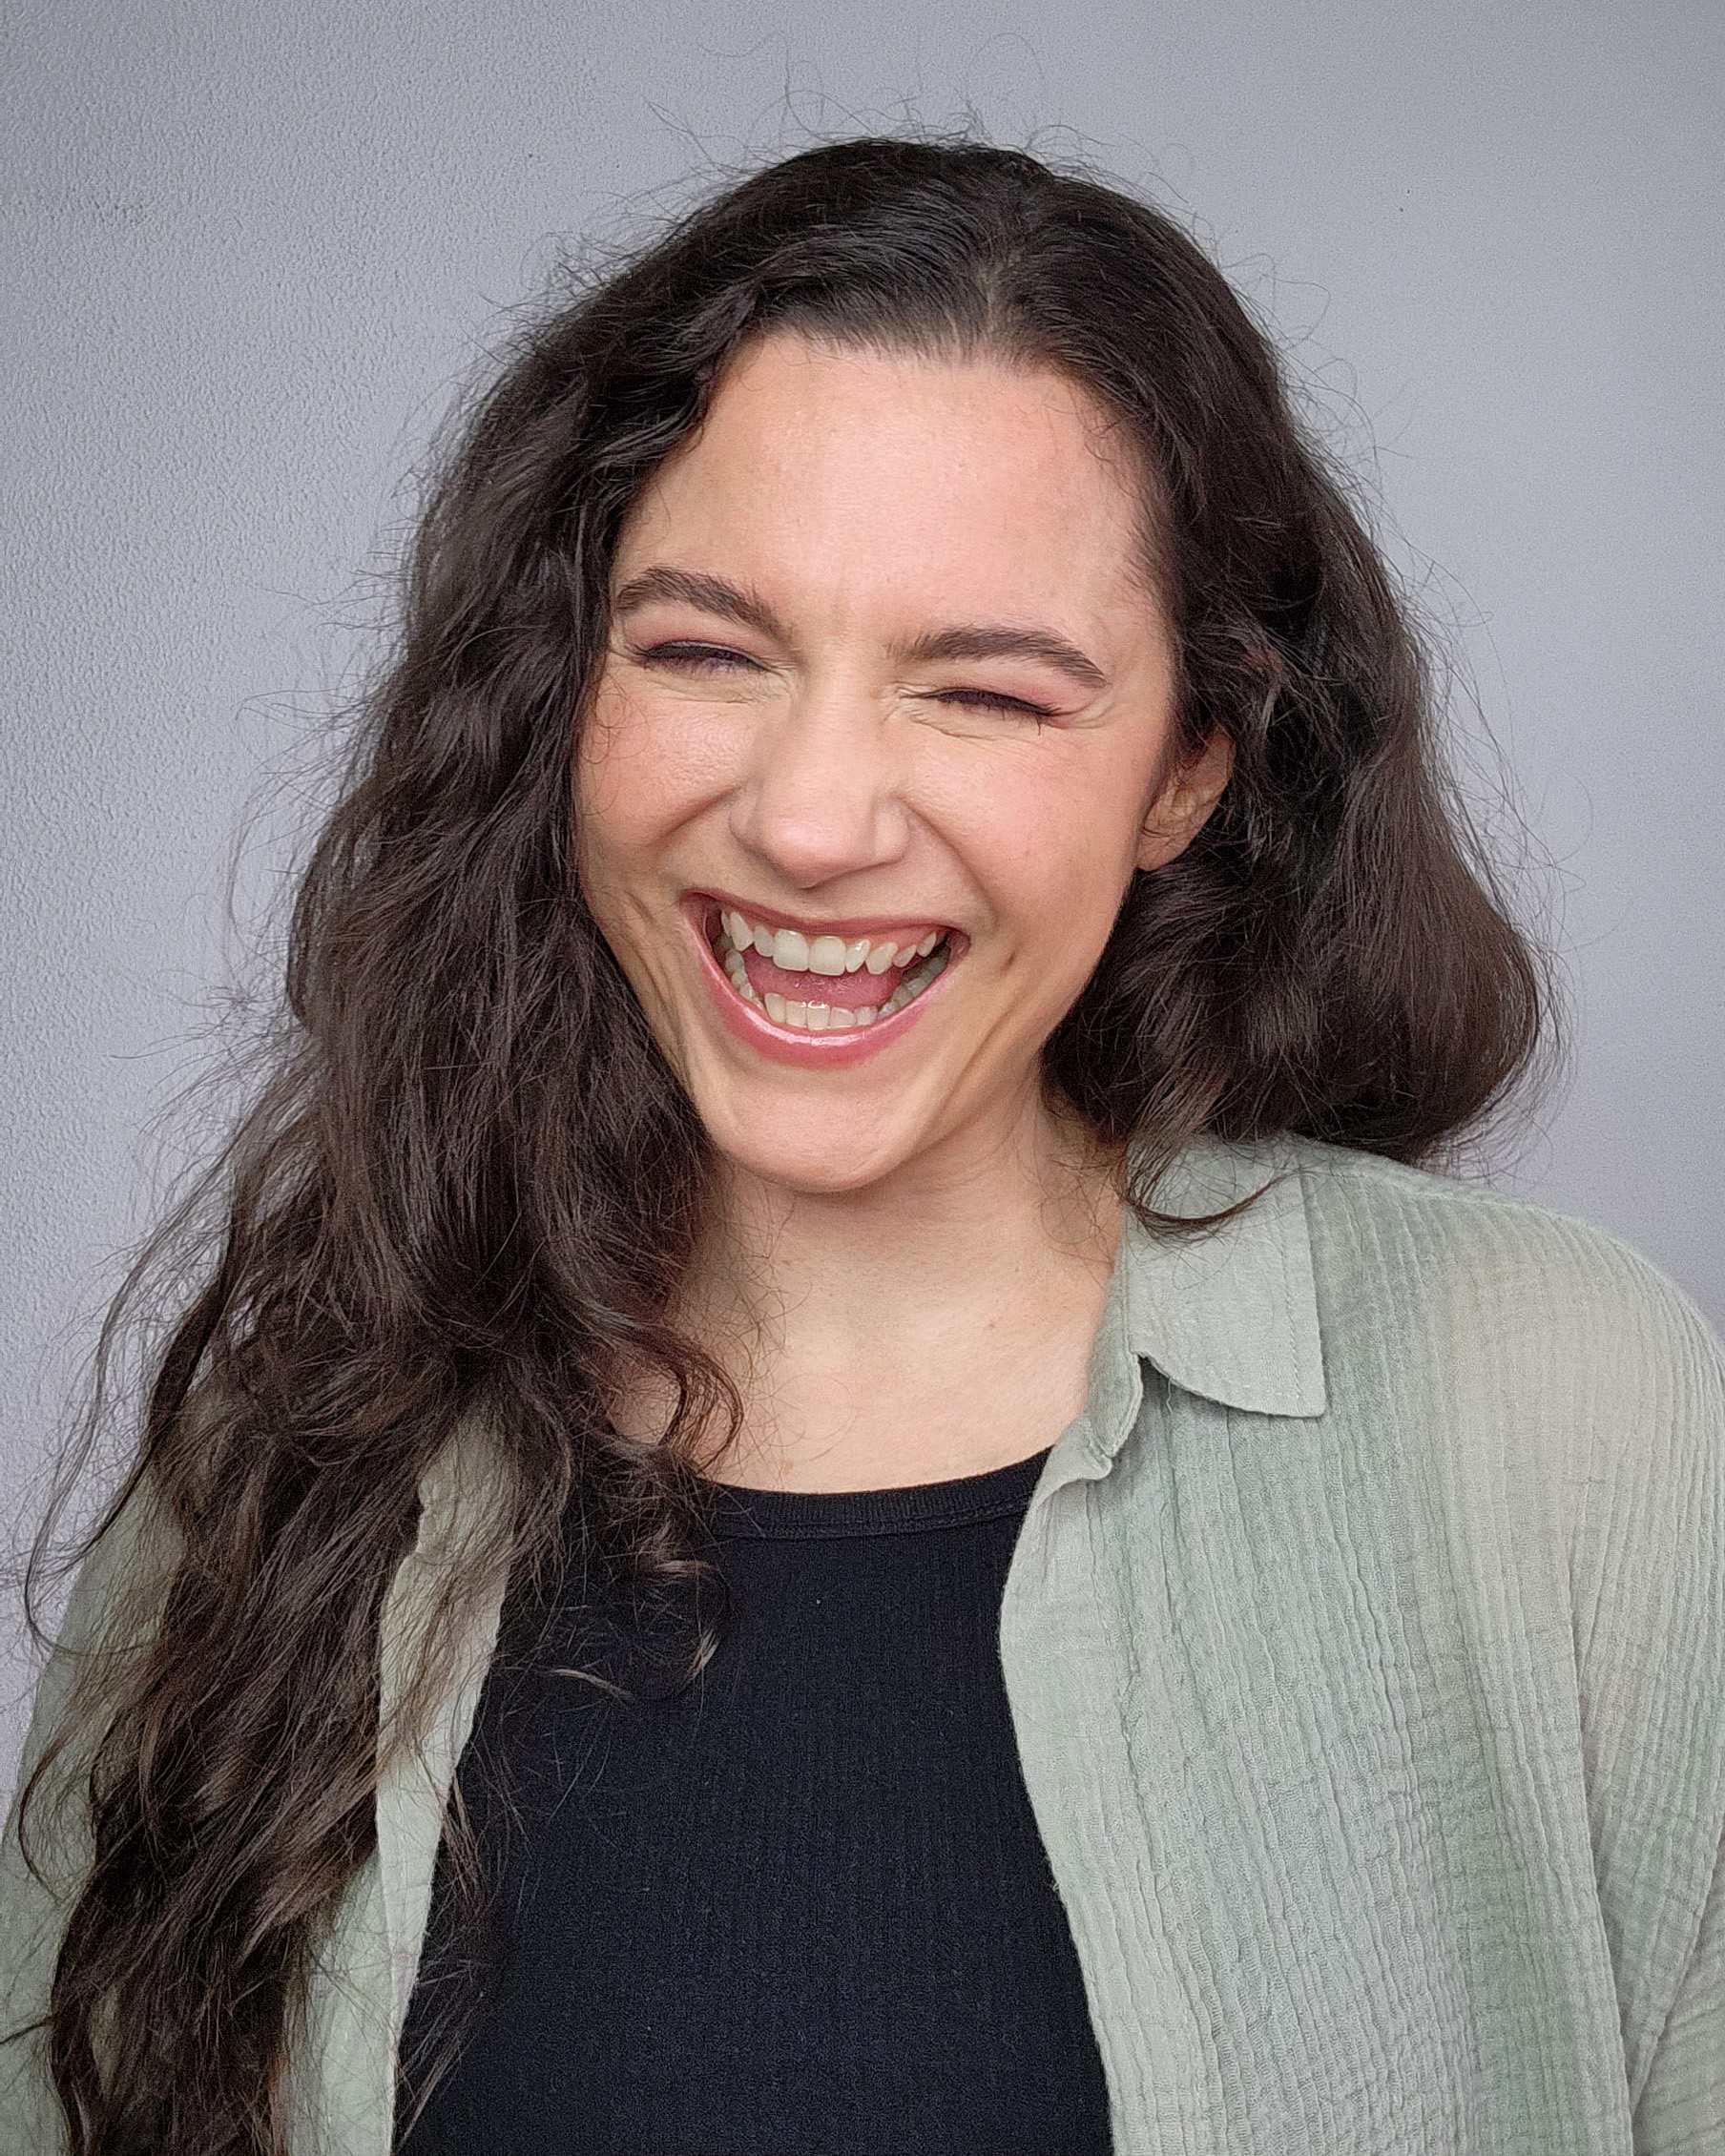 Nina Nikolic - Woman laughing with long brown hair, black top and green shirt - cartoon voice actor